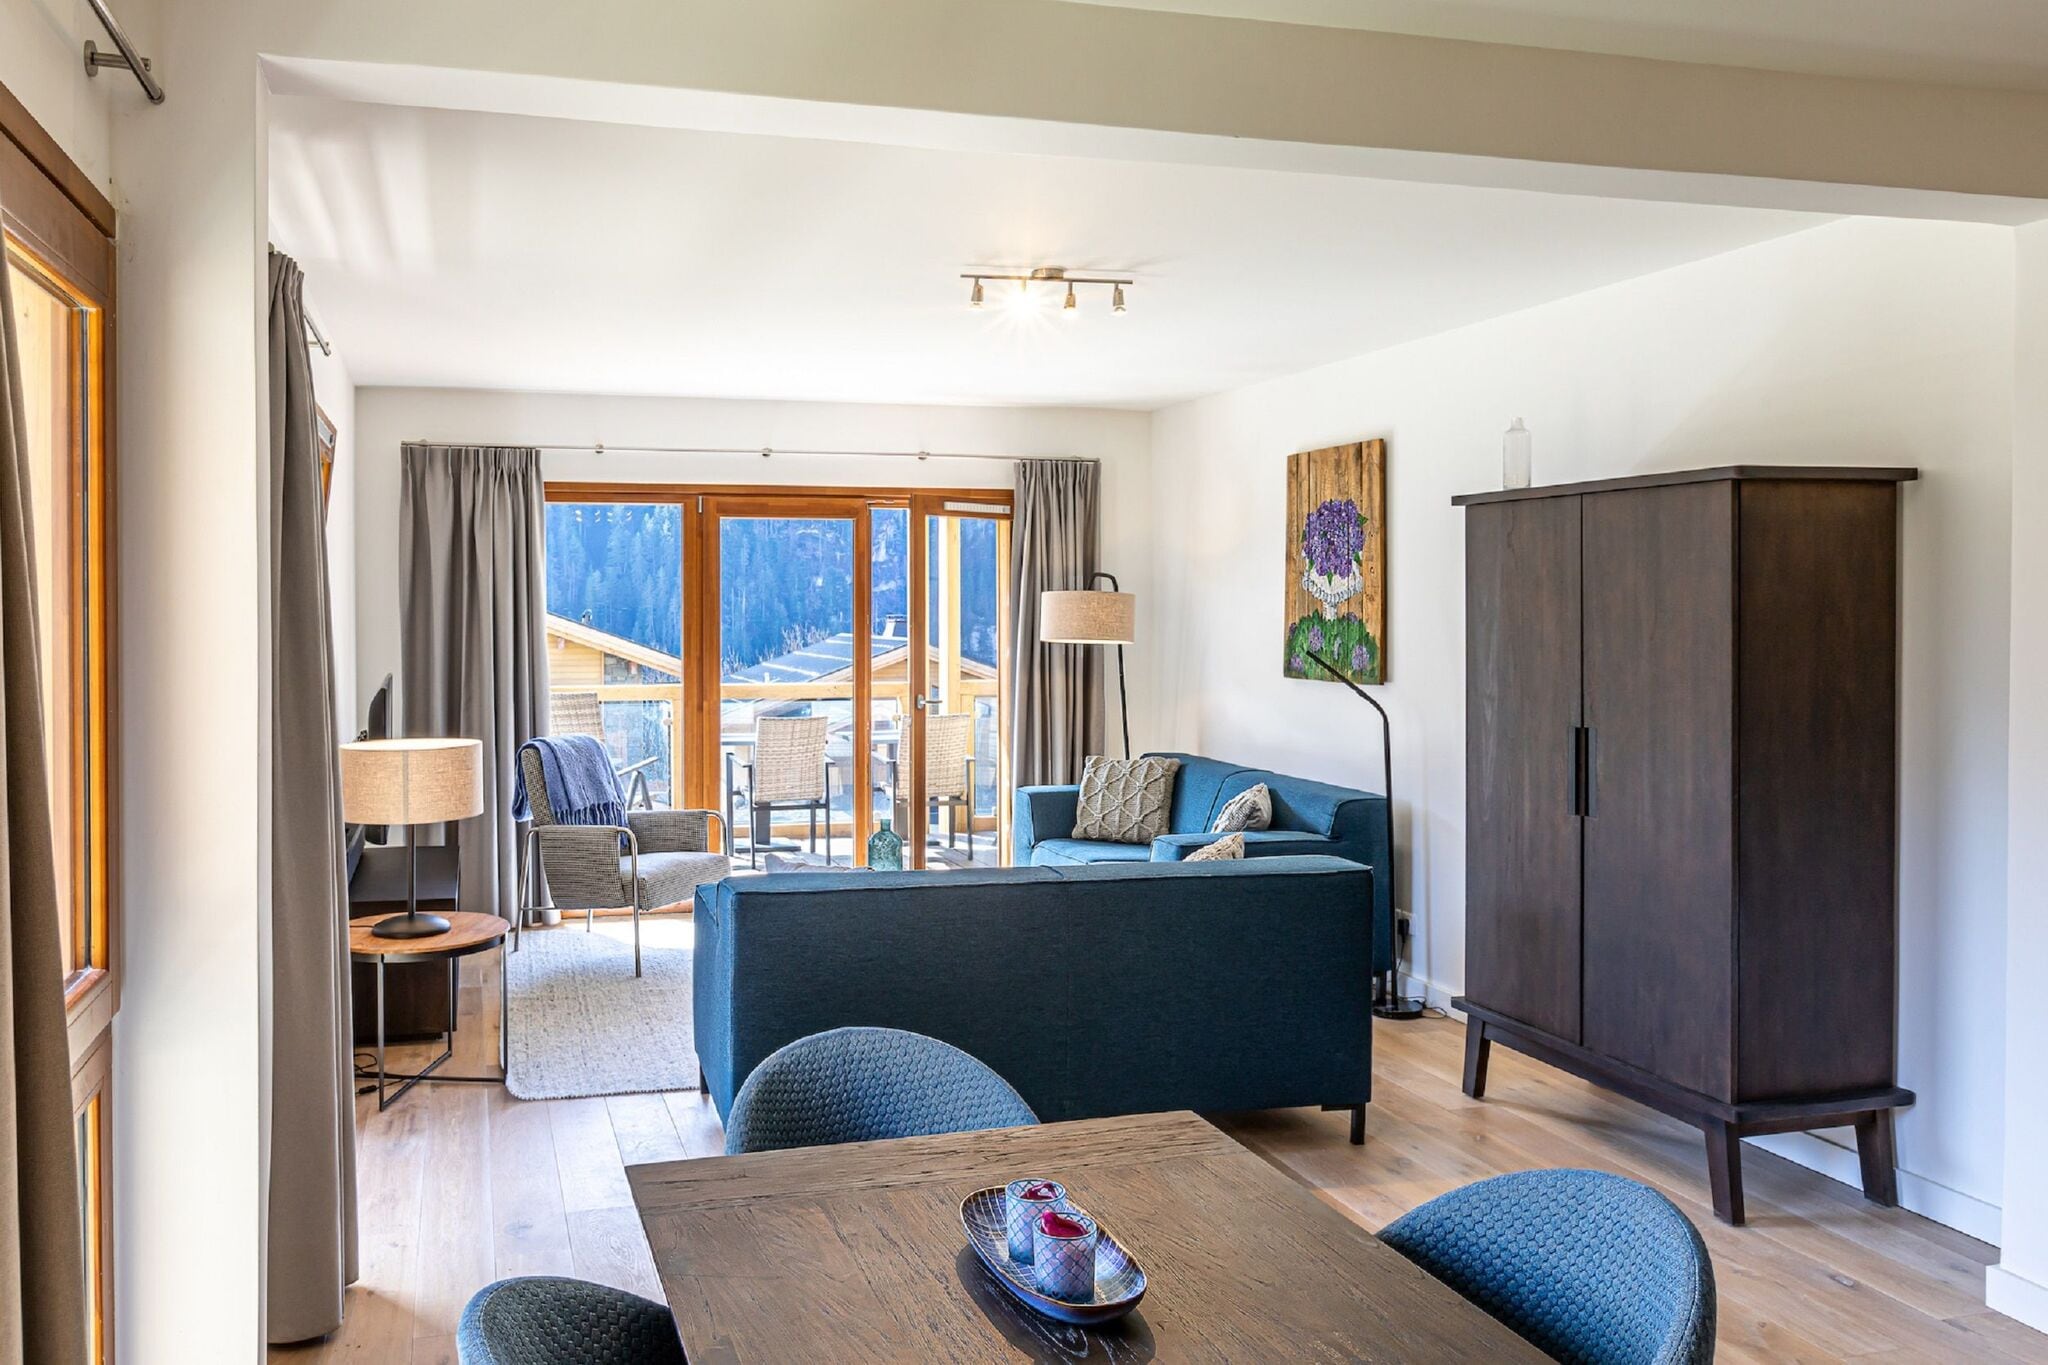 Luxurious apartment in Abondance, ski lift 1.5 km away.